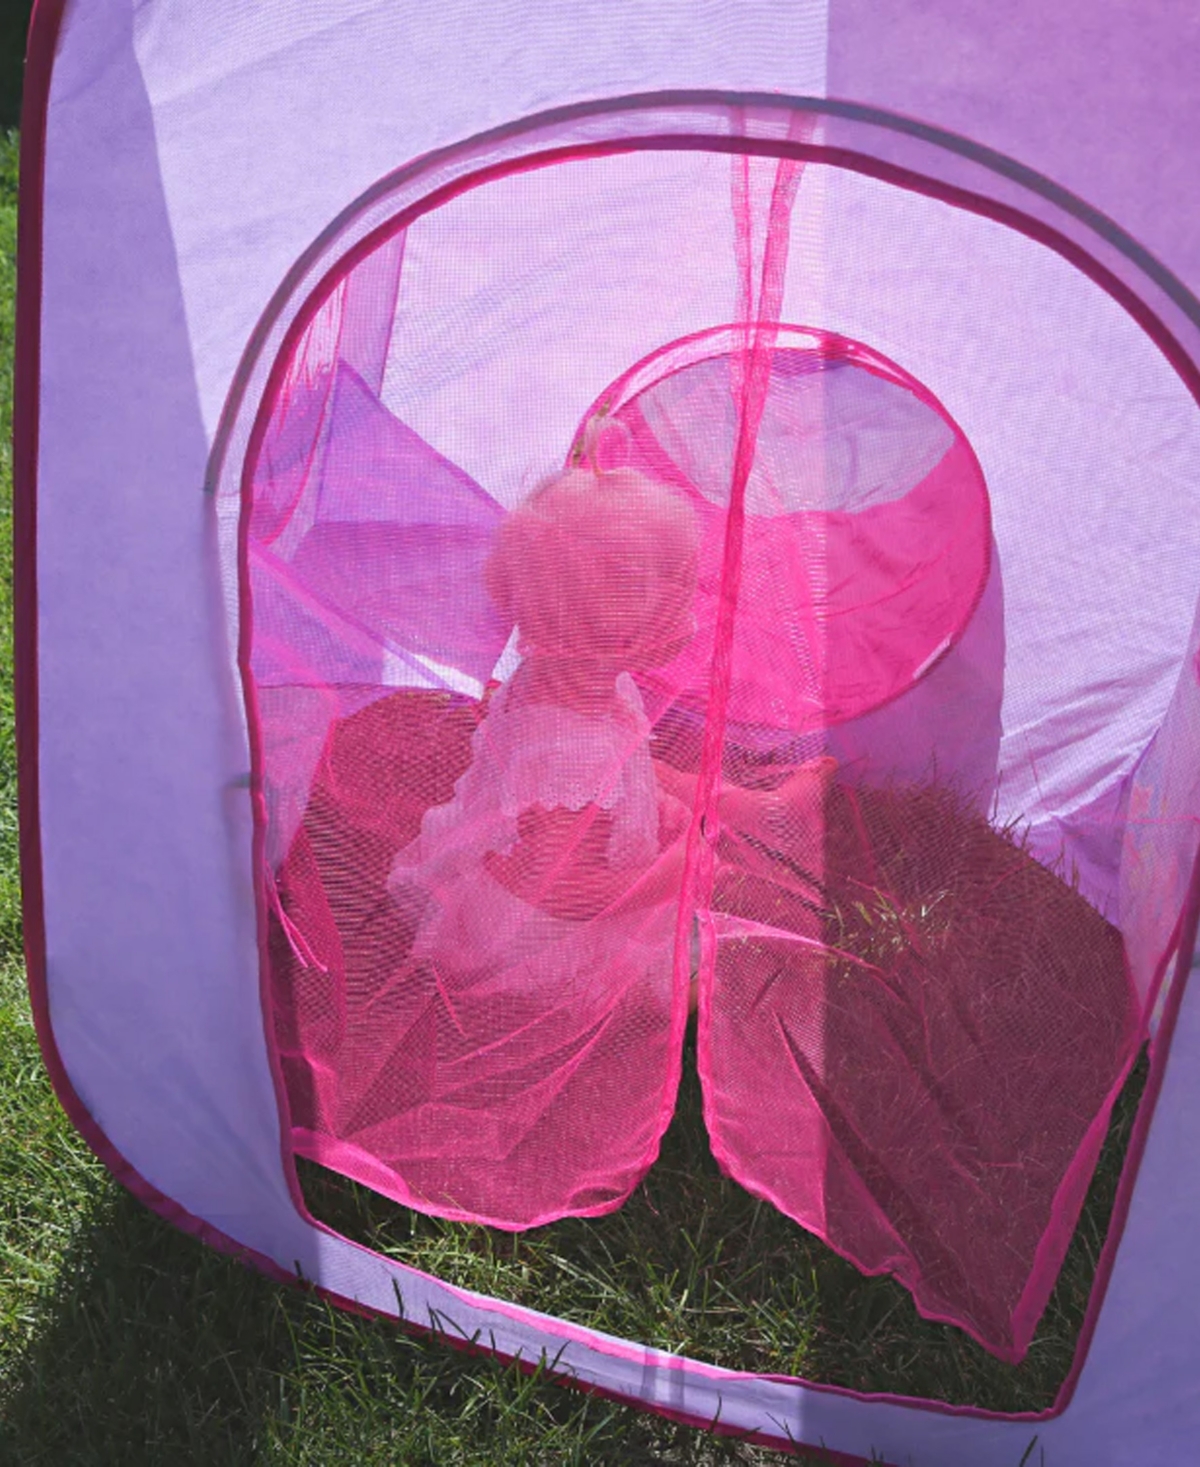 Shop M&m Sales Enterprises Blossom House Pop-up Play Tent In Purple,pink